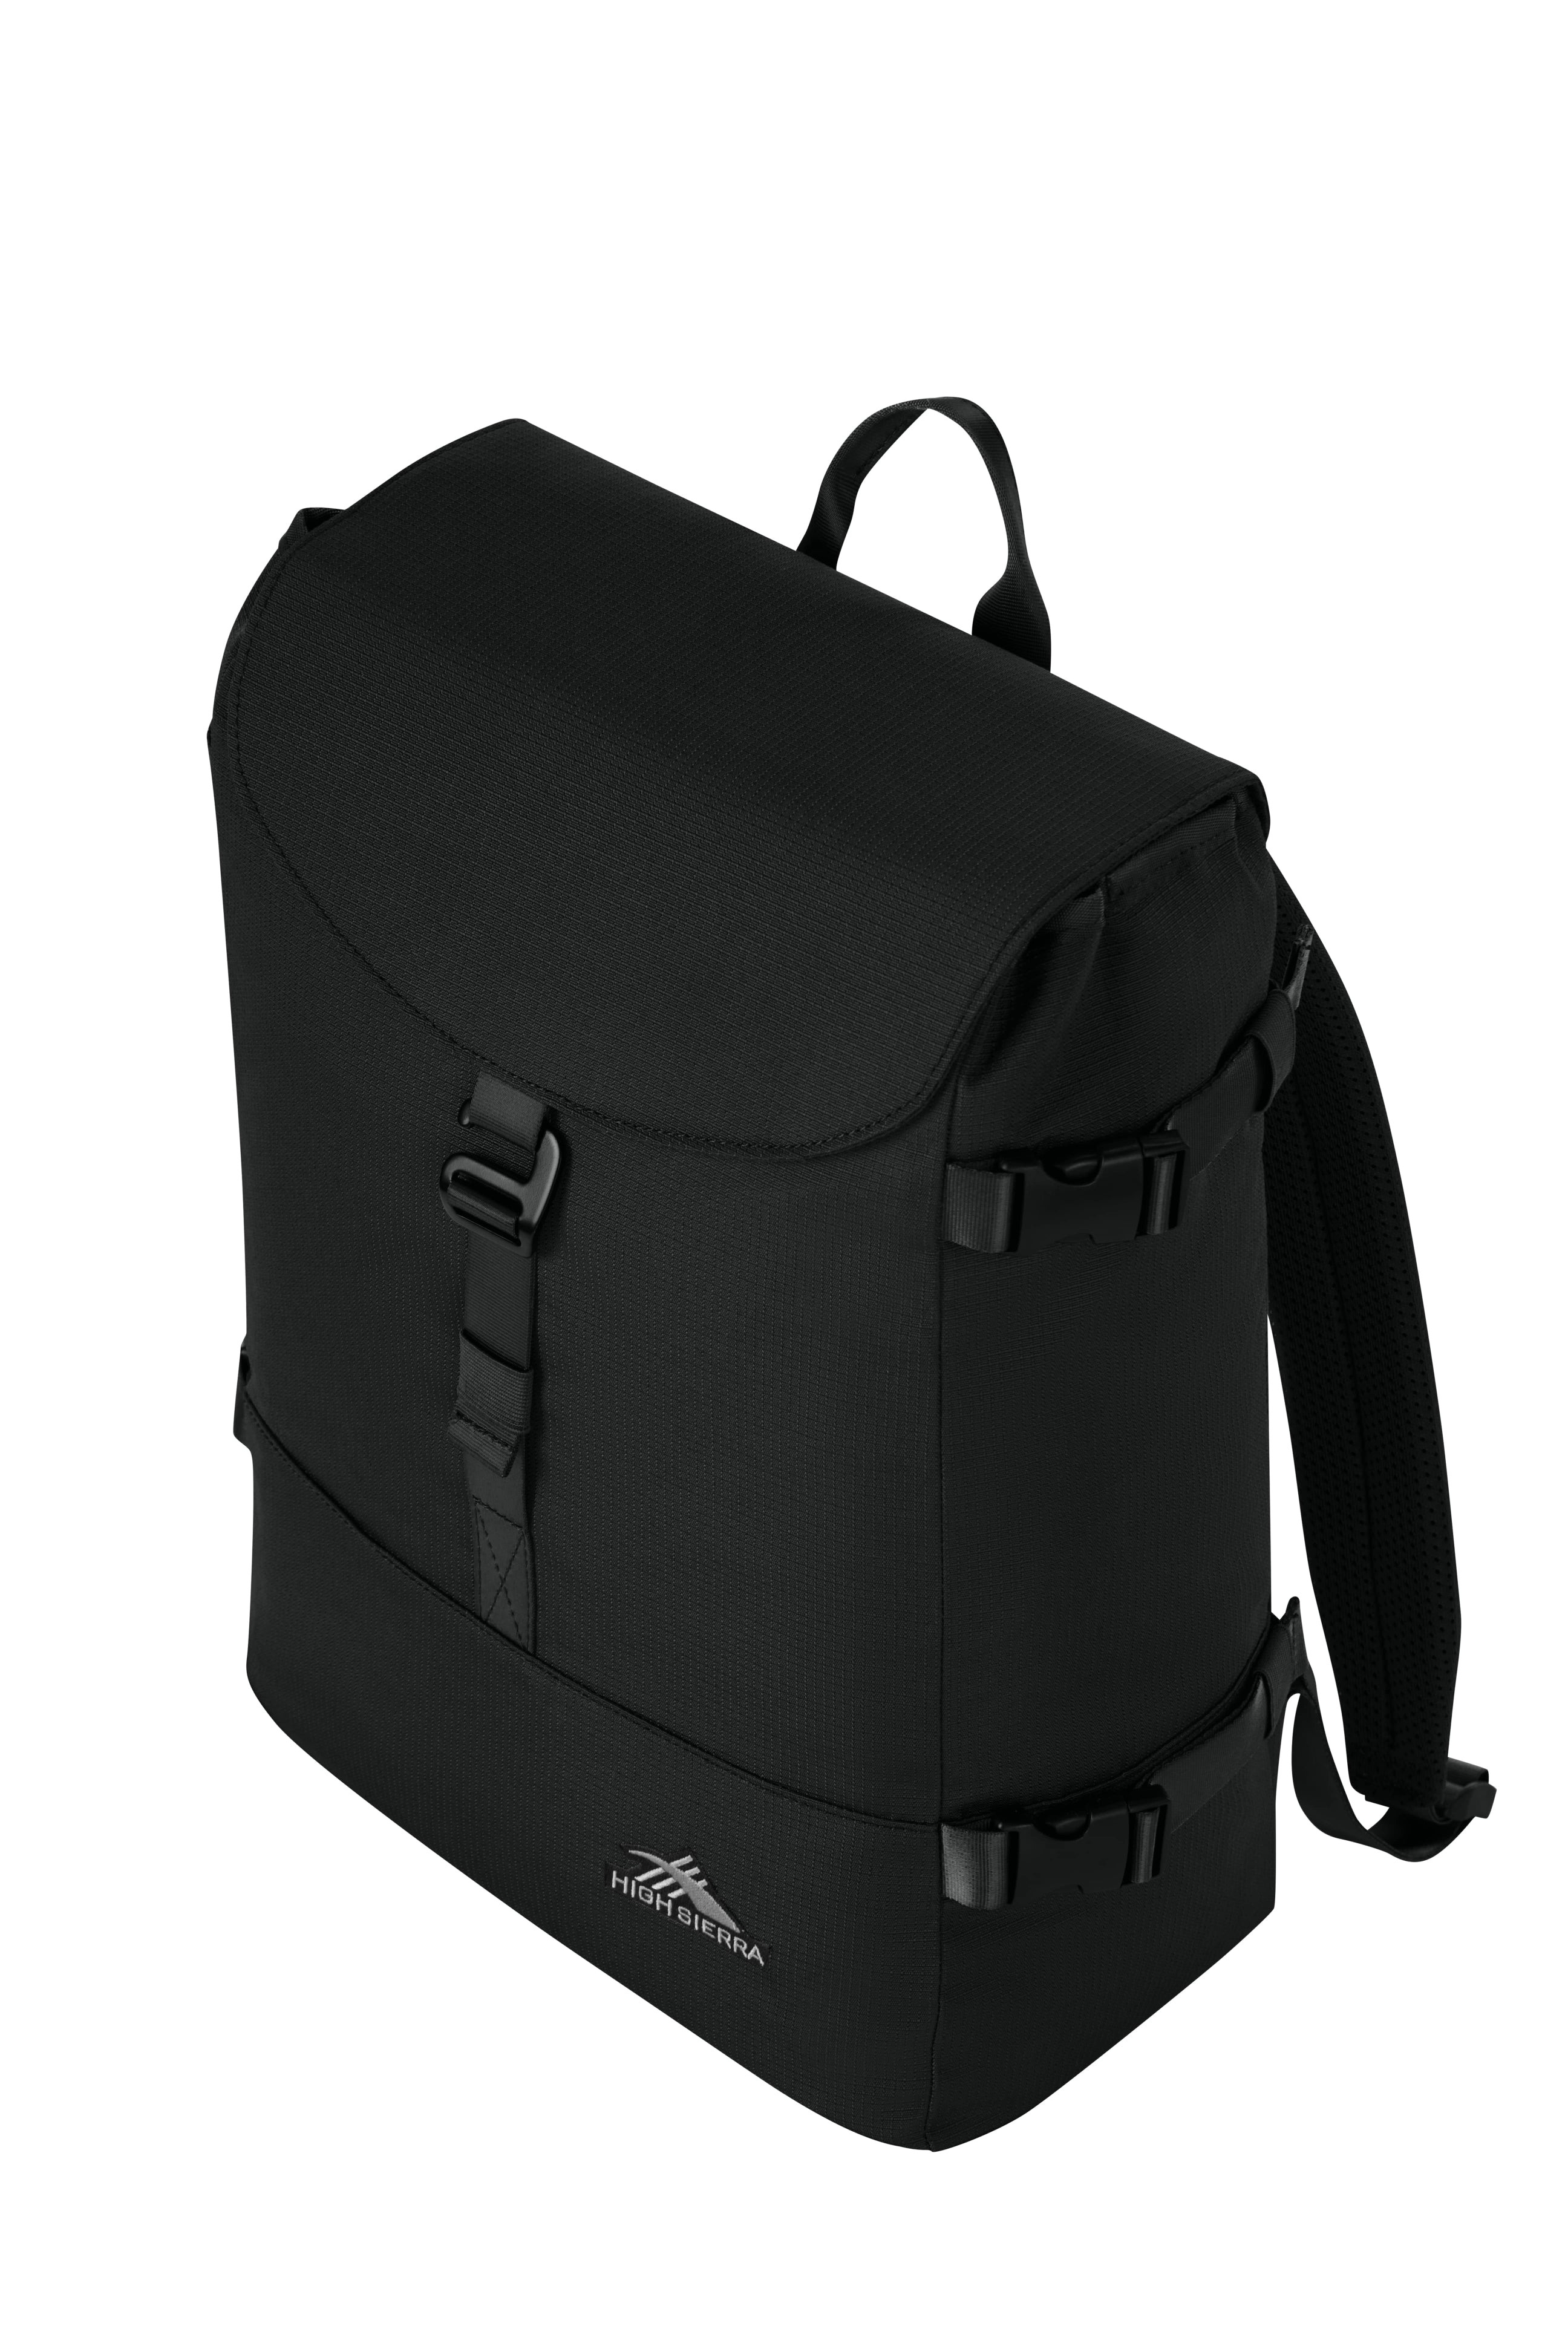 High Sierra - Camille 20L 15.6in Laptop backpack - Black-6